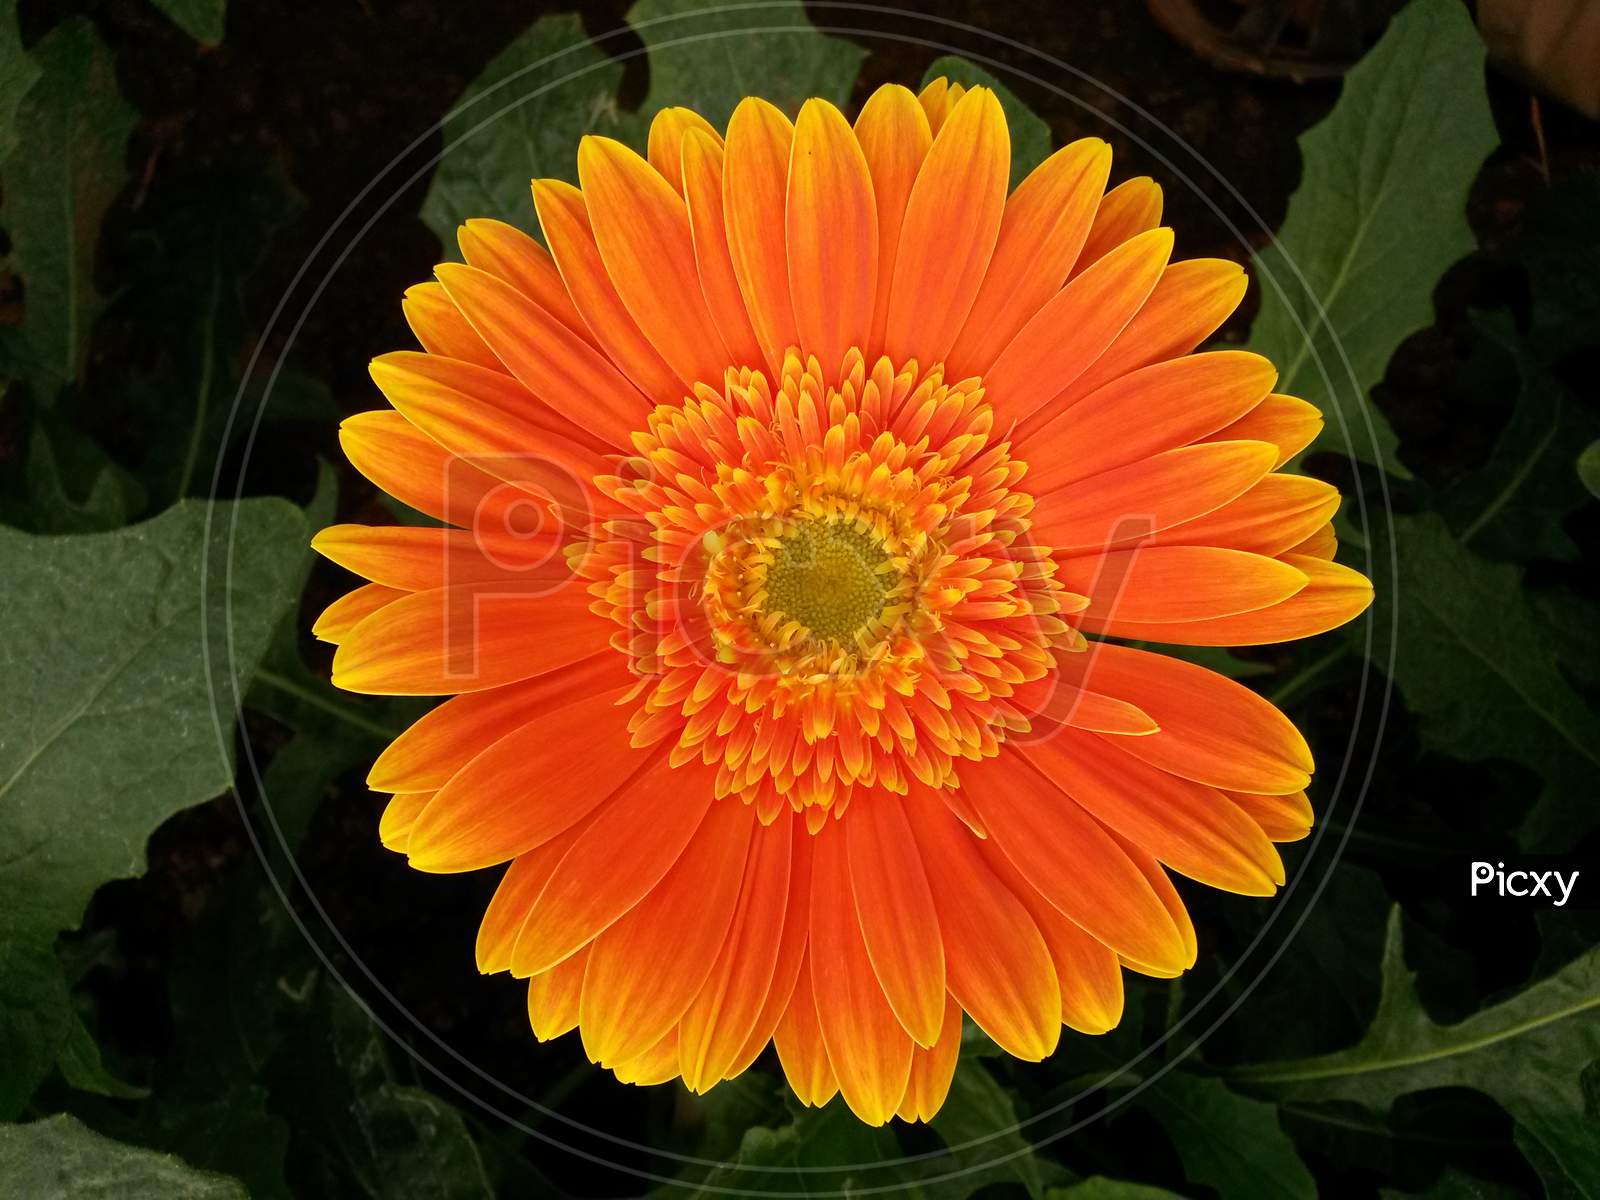 Orange Gerbera Flower With Green Core